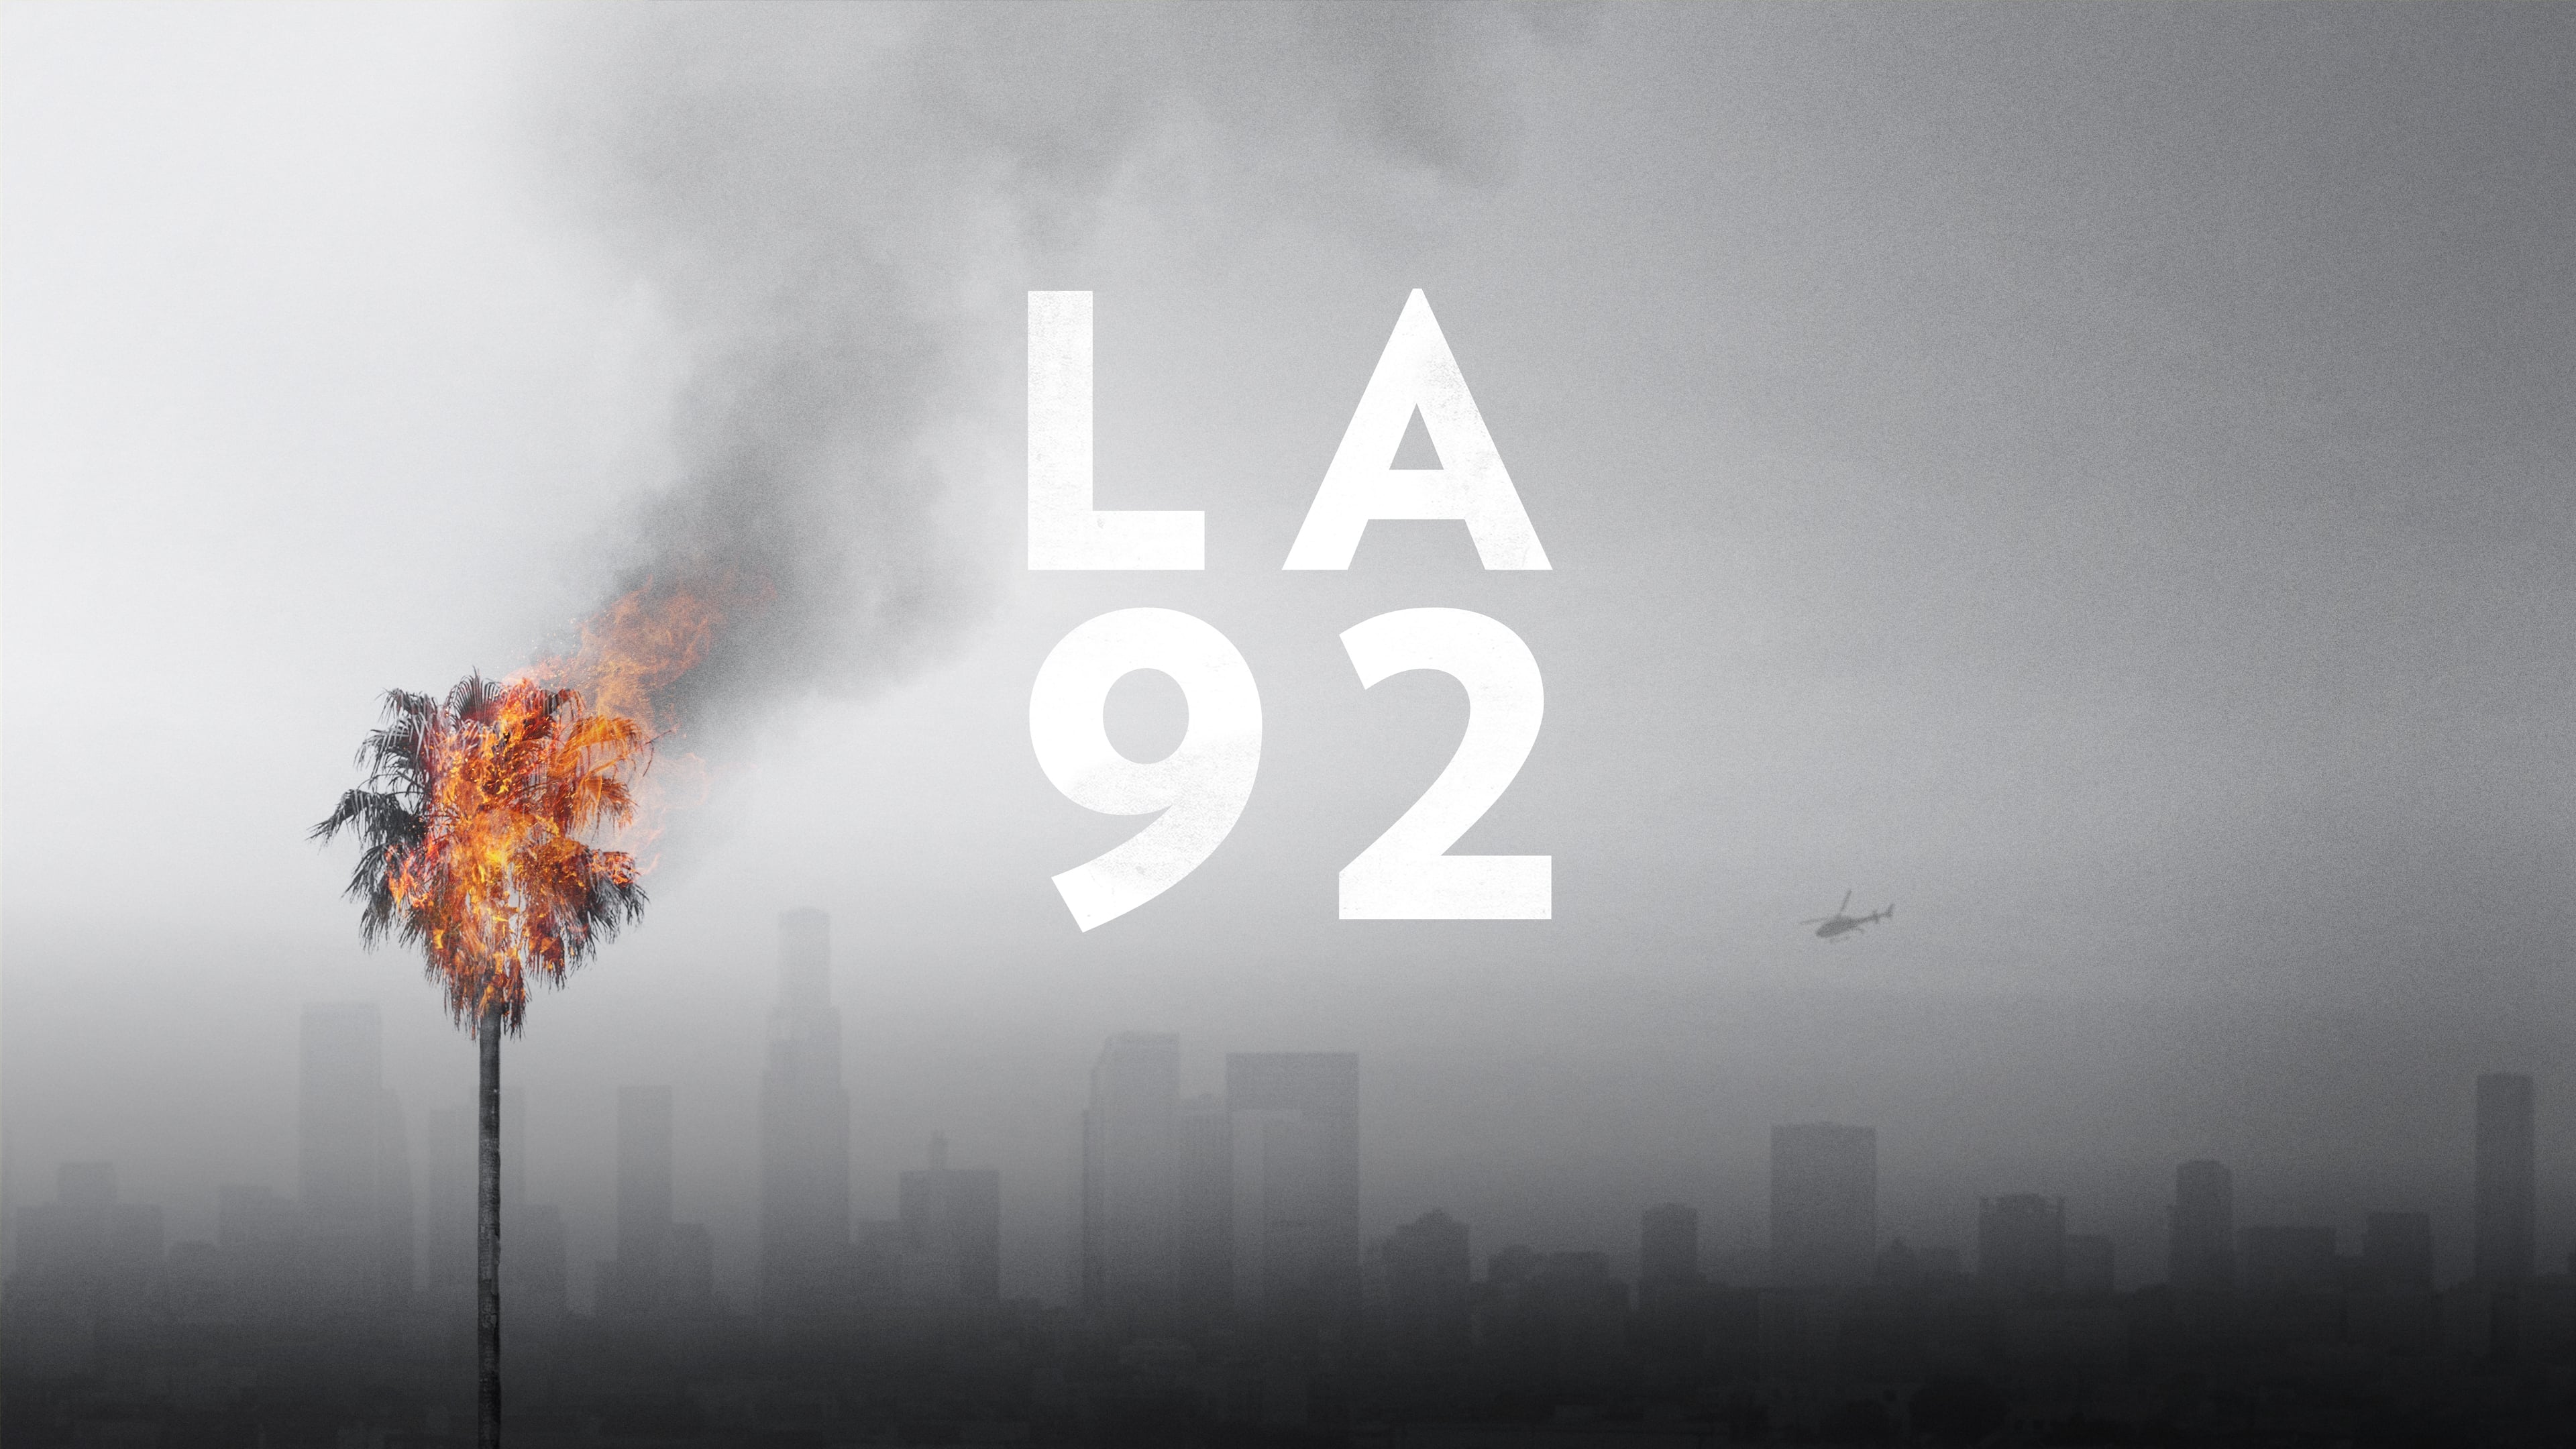 Los Angelesin mellakat -92 (2017)